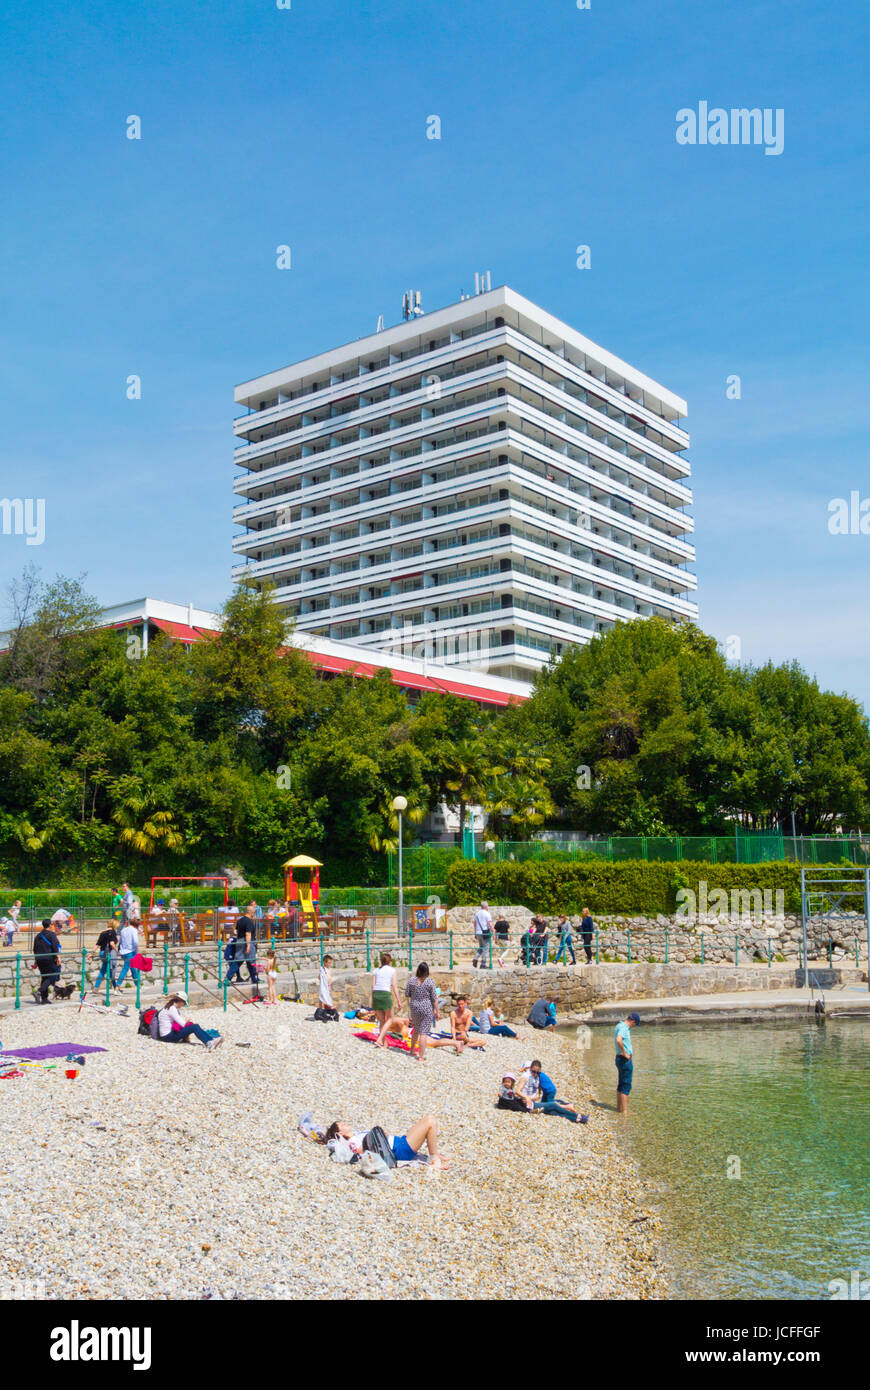 Plaza Tomasevac, beach in front of hotel Ambasador, Opatija, Kvarner Bay, Croatia Stock Photo